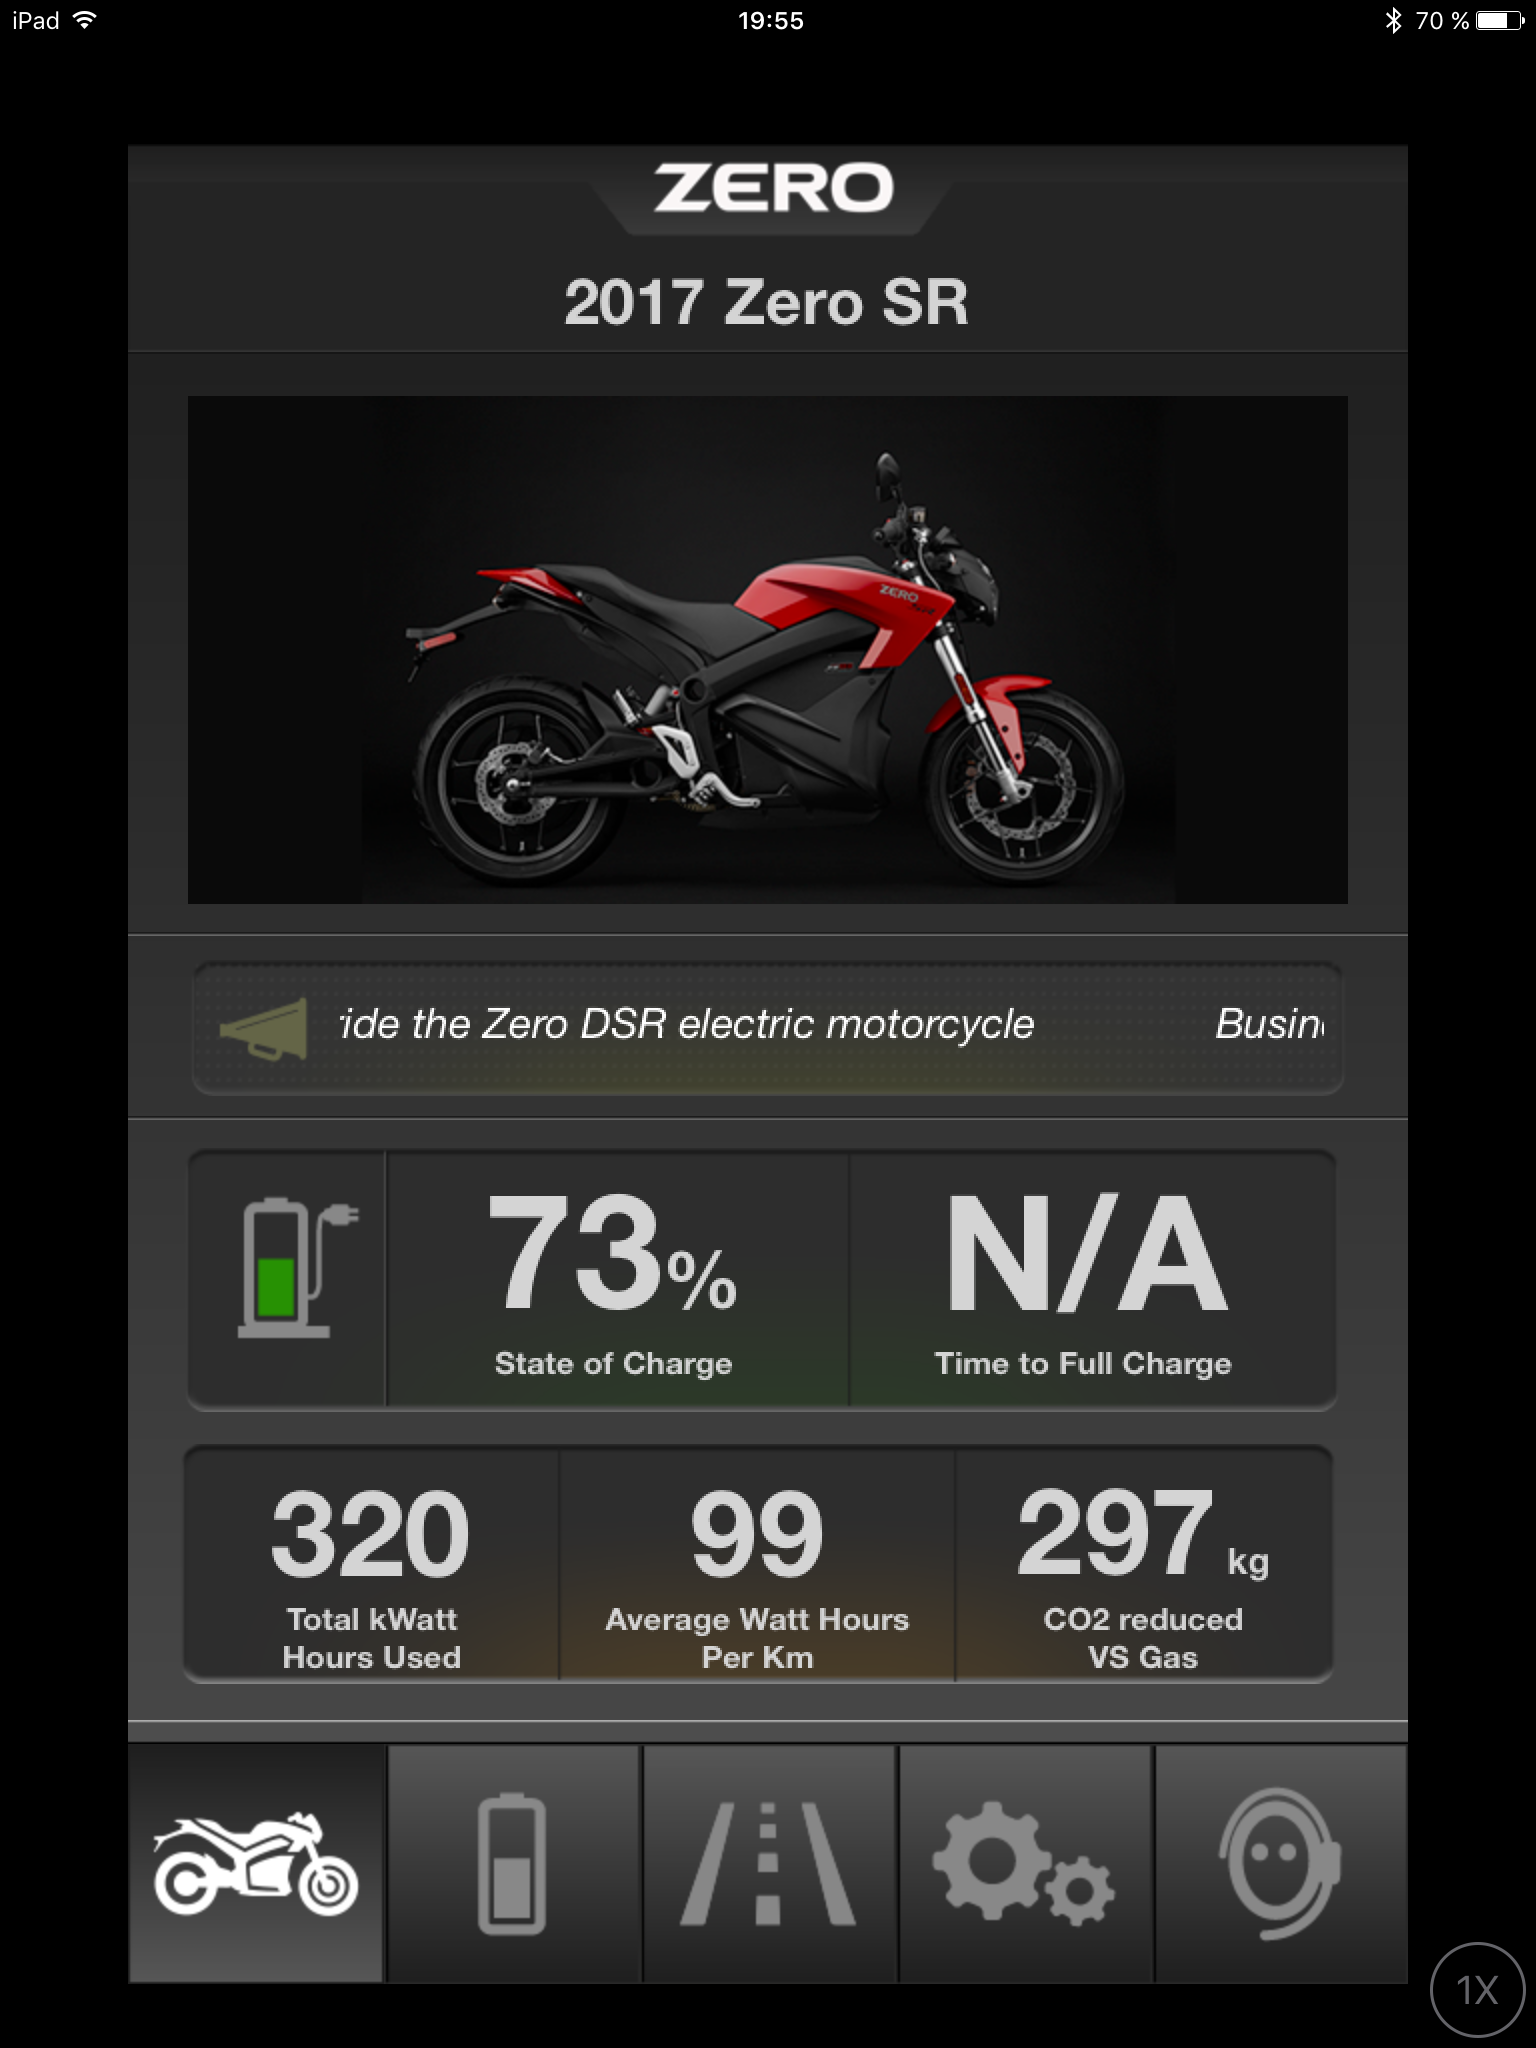 Via appen Zero Motorcycles kan du koppla ihop dig med en Zero-motorcykel via Bluetooth. Bild: Skärmdump från appen i en iPad.